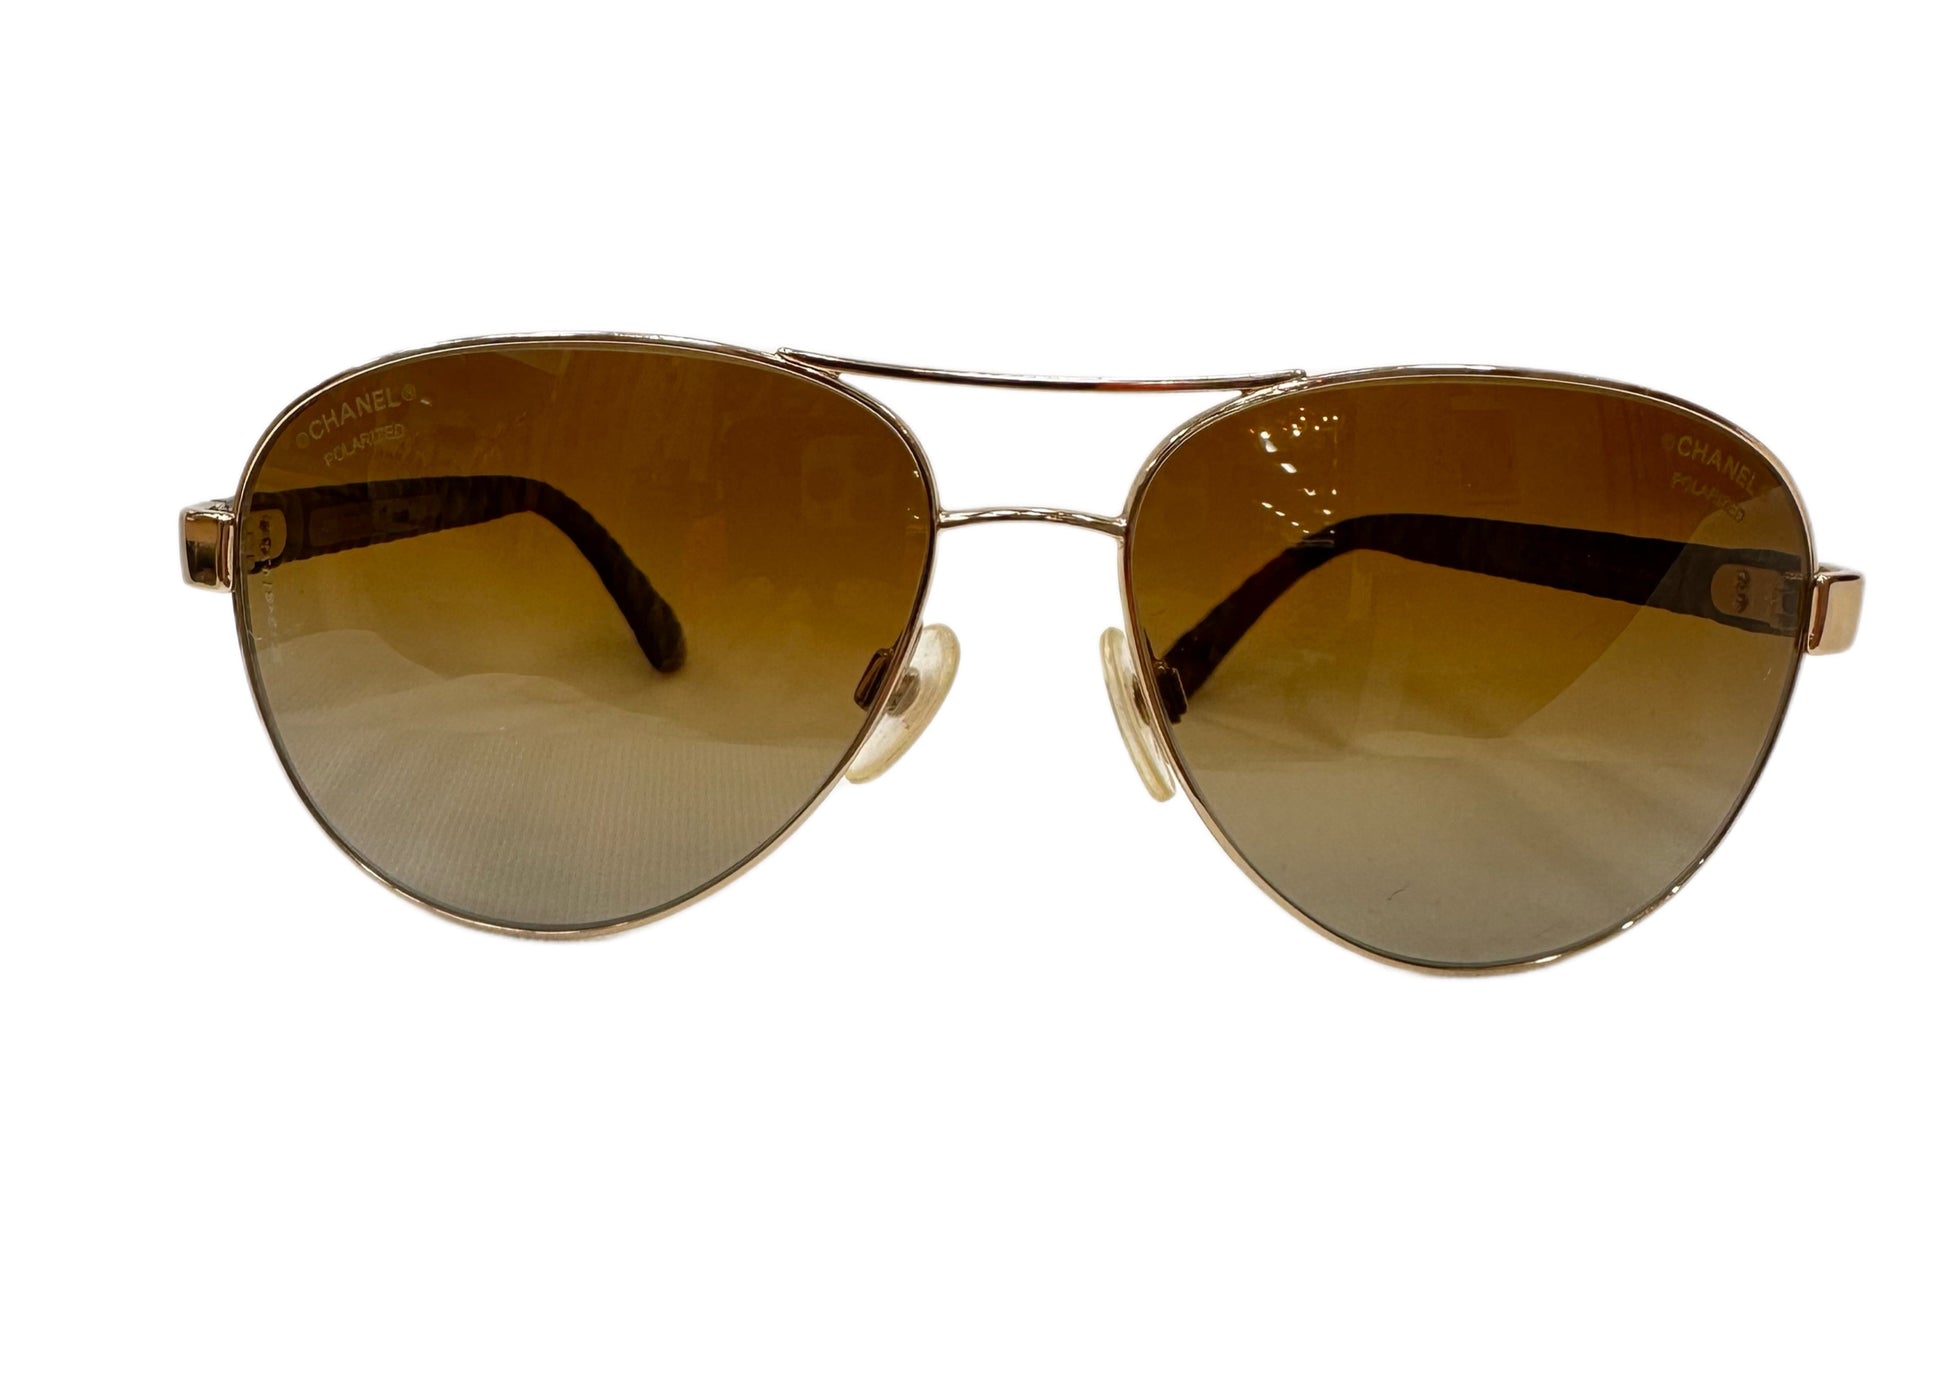 zeroUV - Full Mirror Mirrored Metal Aviator Sunglasses (Silver)